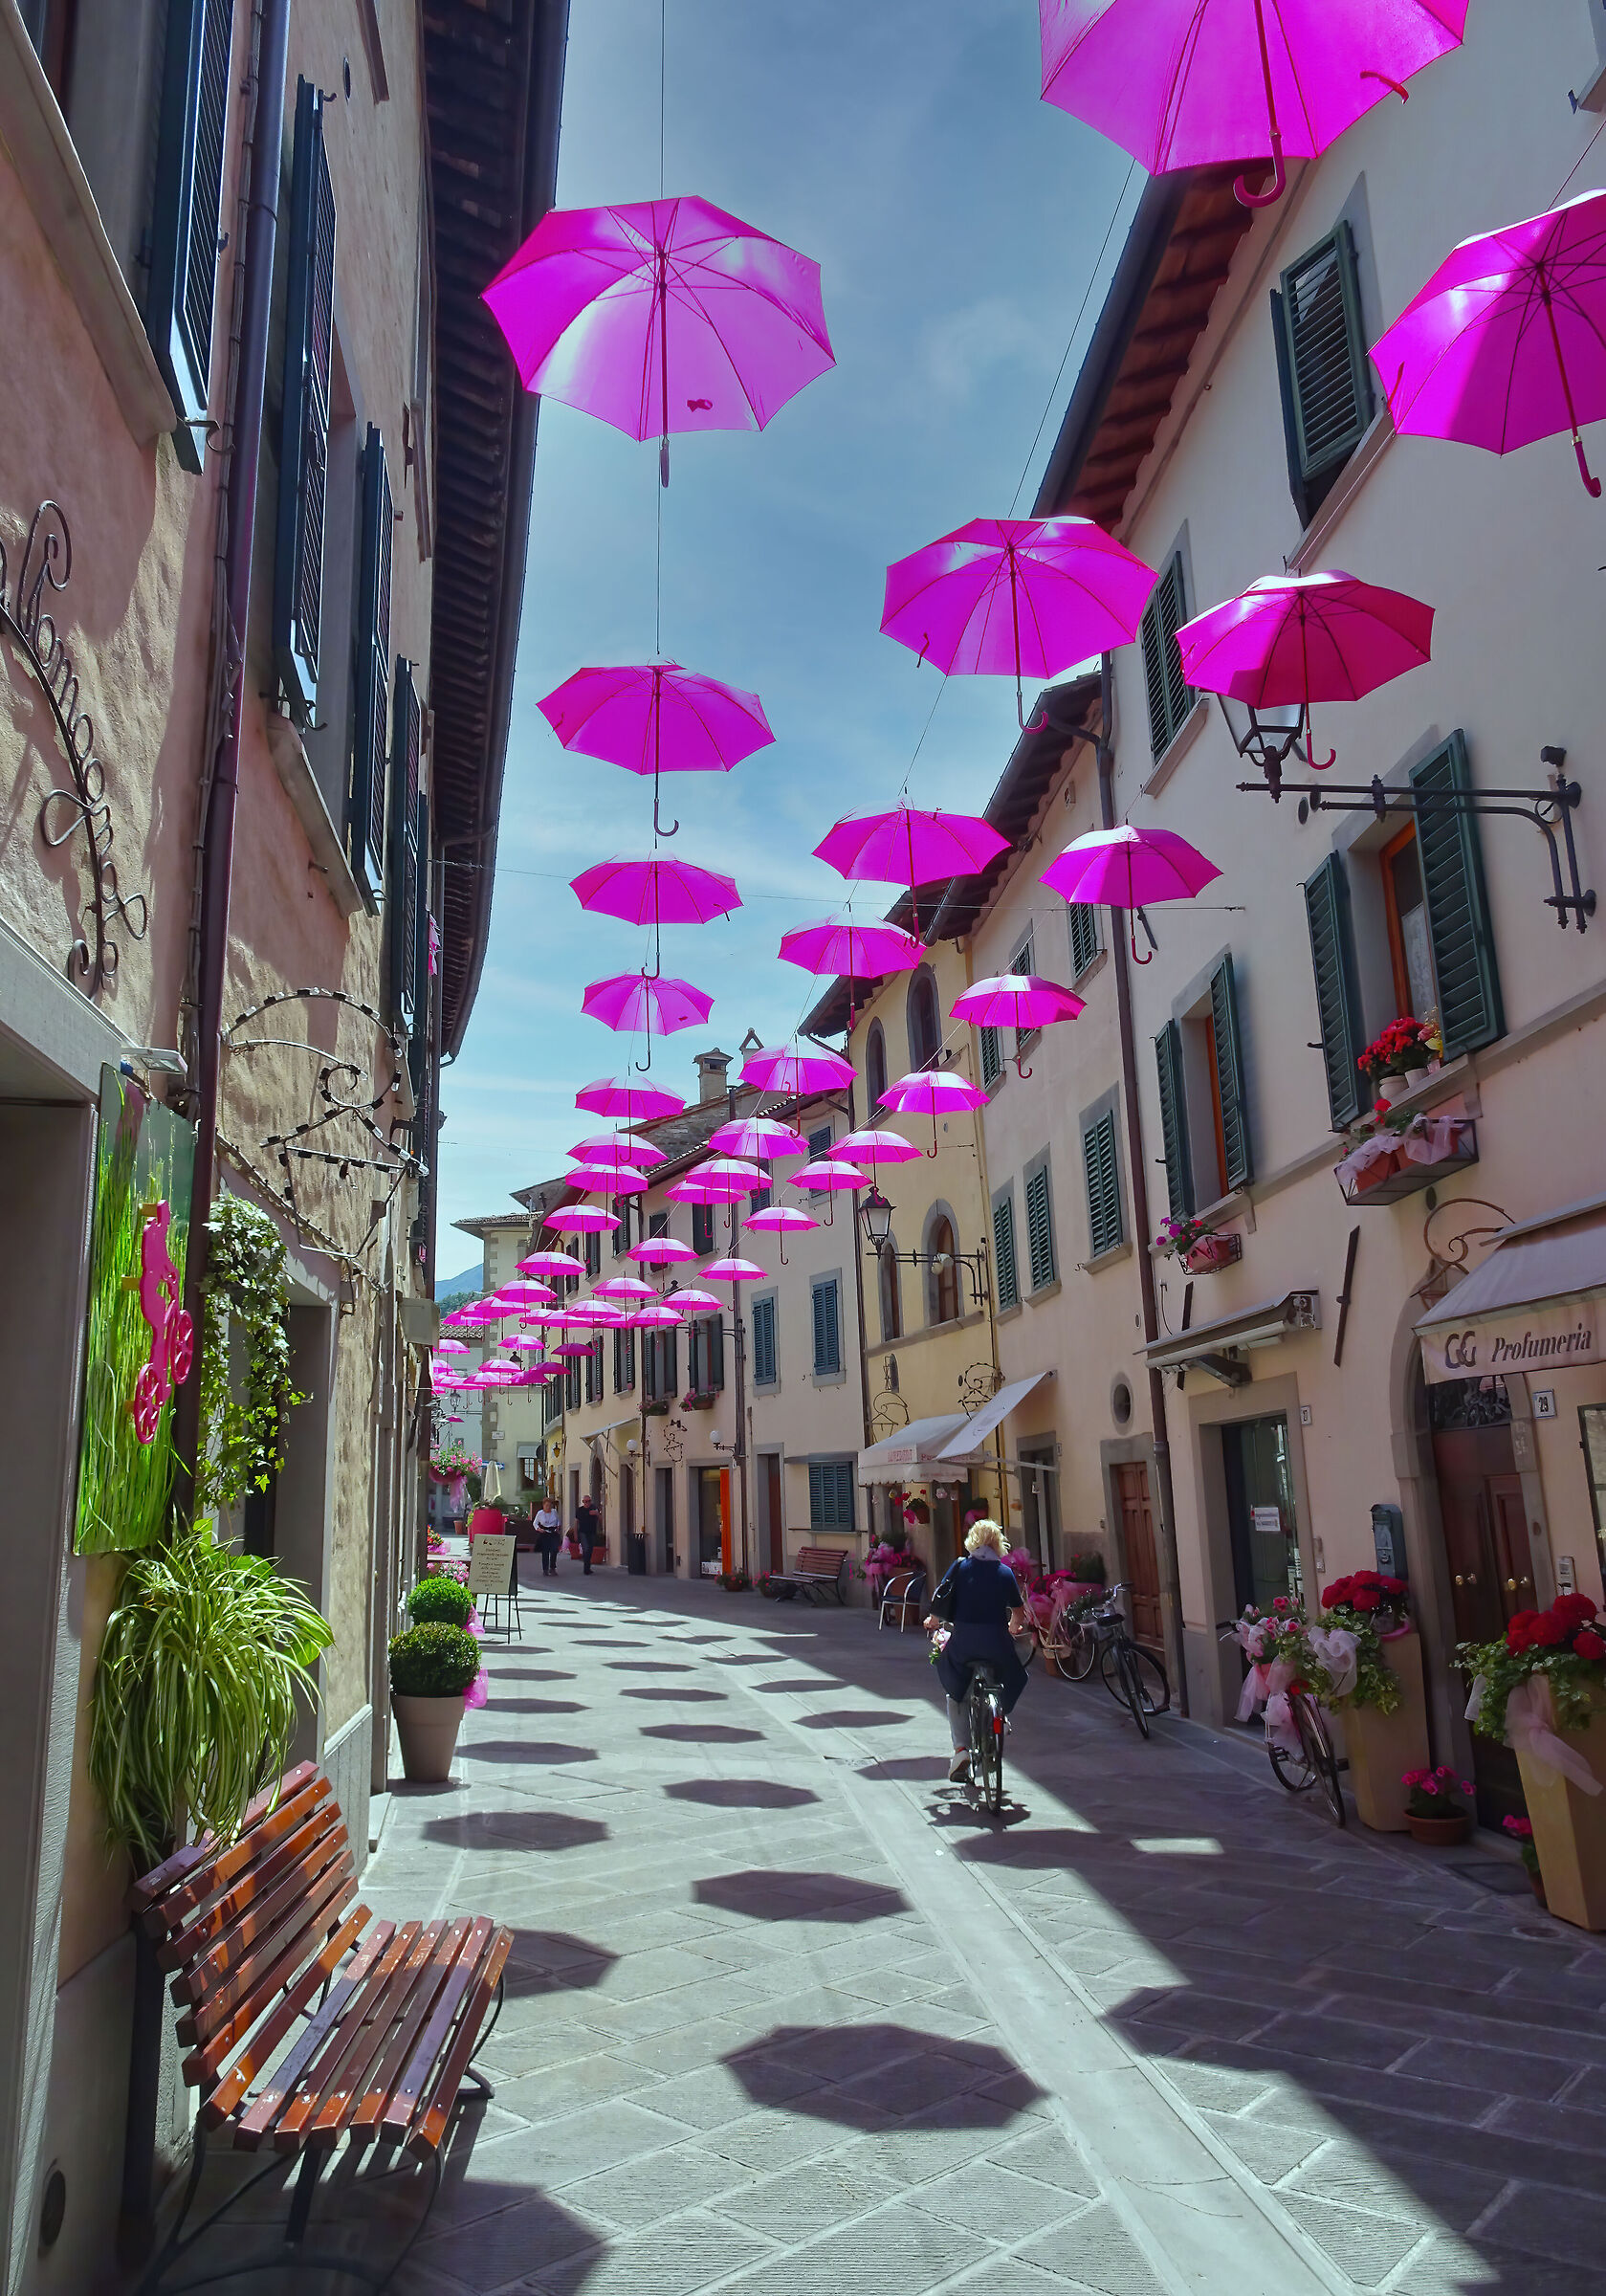 Bagno di Romagna Pink Umbrellas...